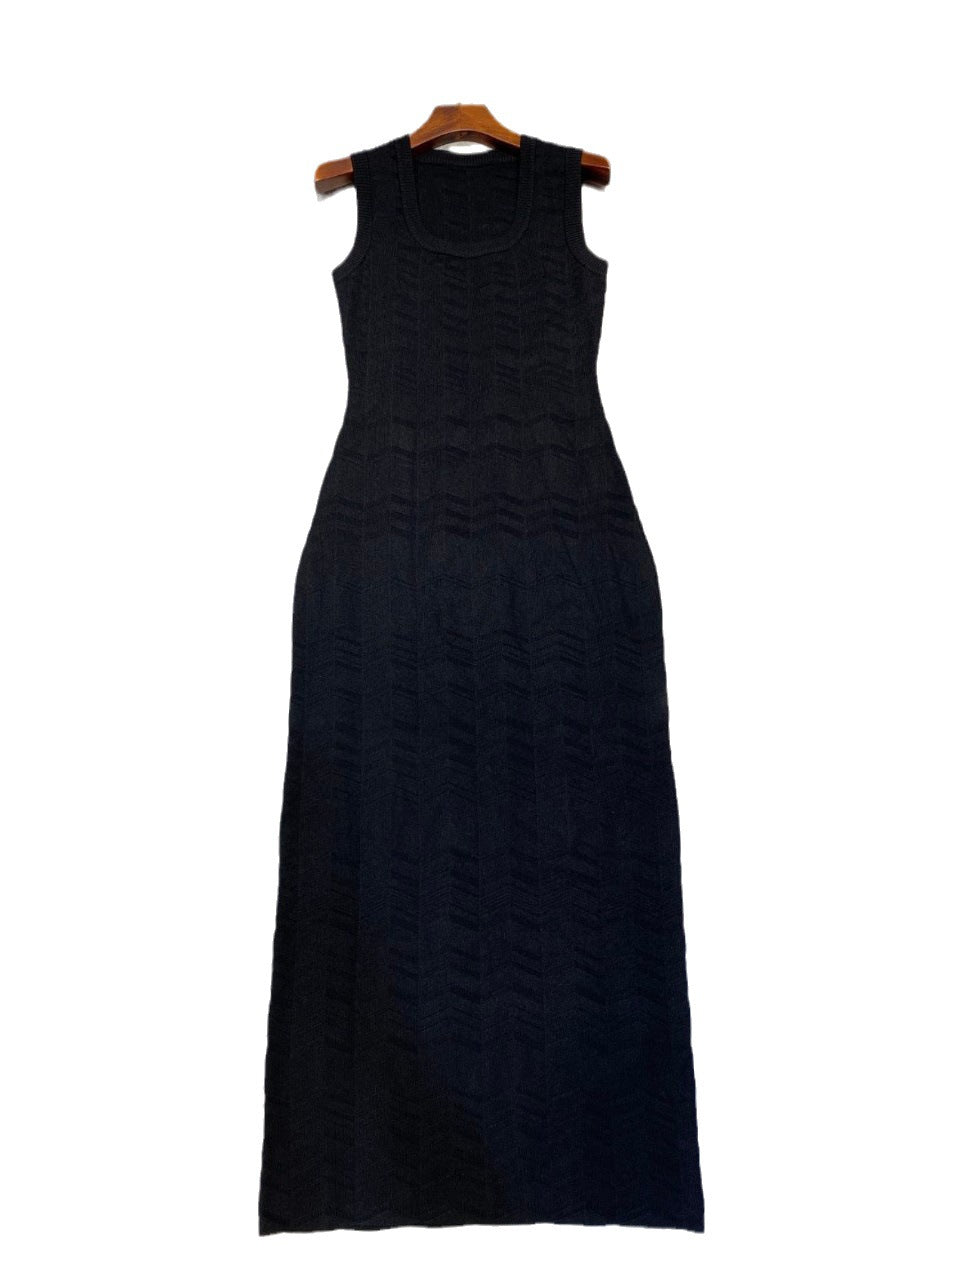 Chevron Square Collar Sleeveless Dress - Kelly Obi New York